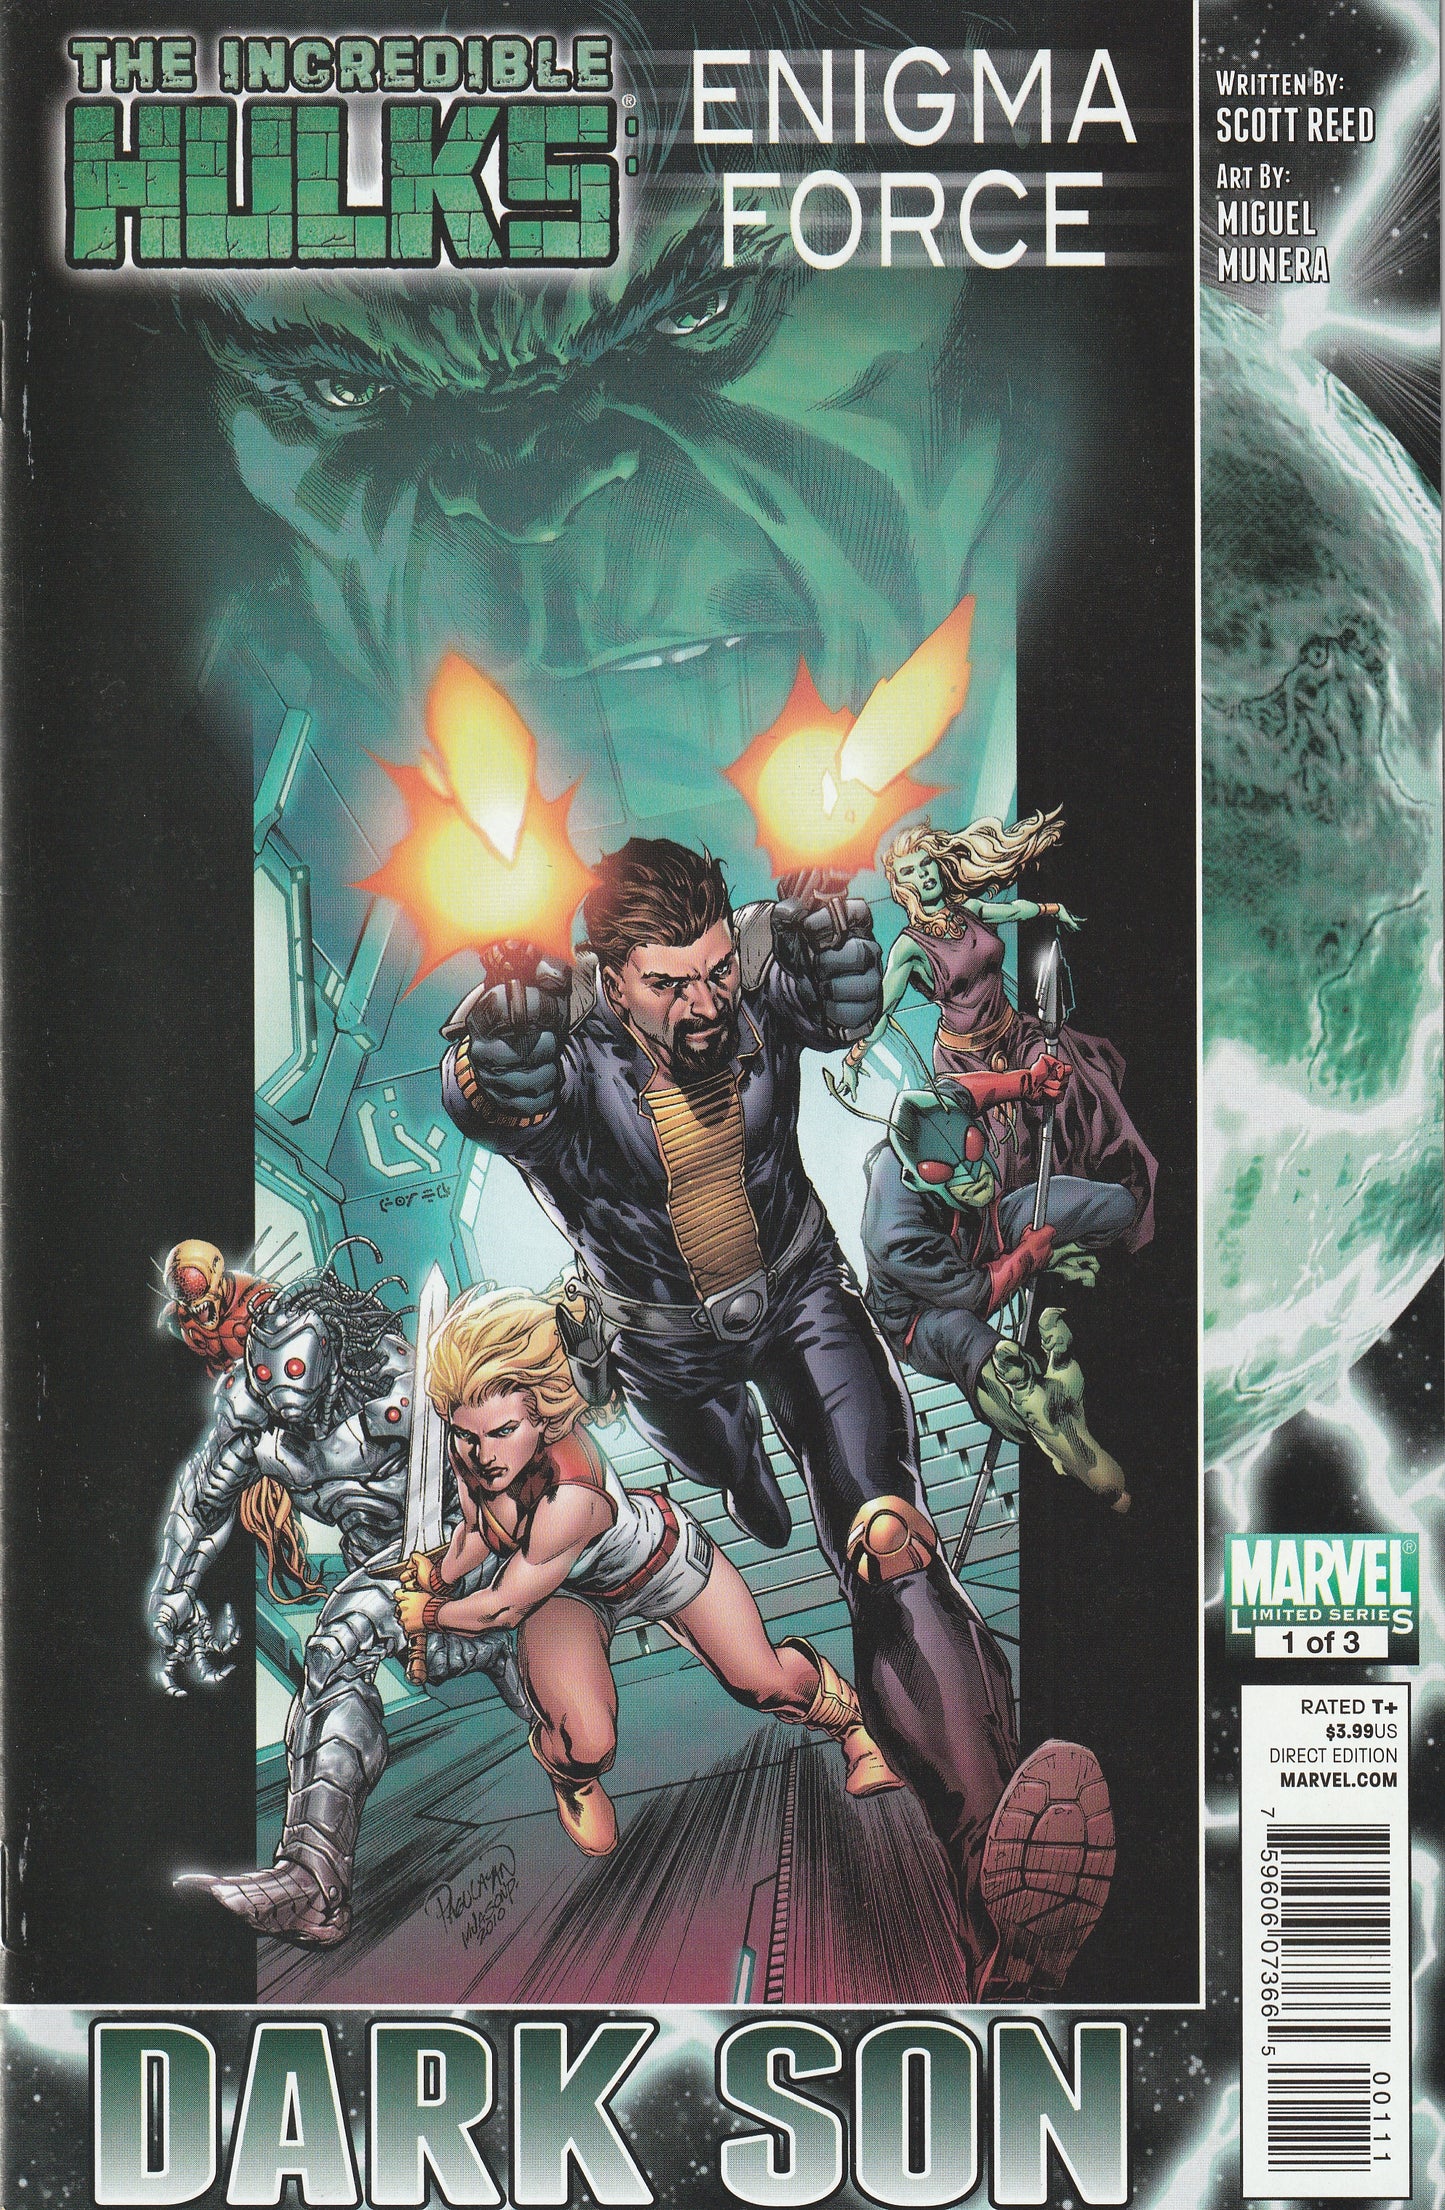 Incredible Hulks Enigma Force - Dark Son (2010-2011) - 3 issue mini series